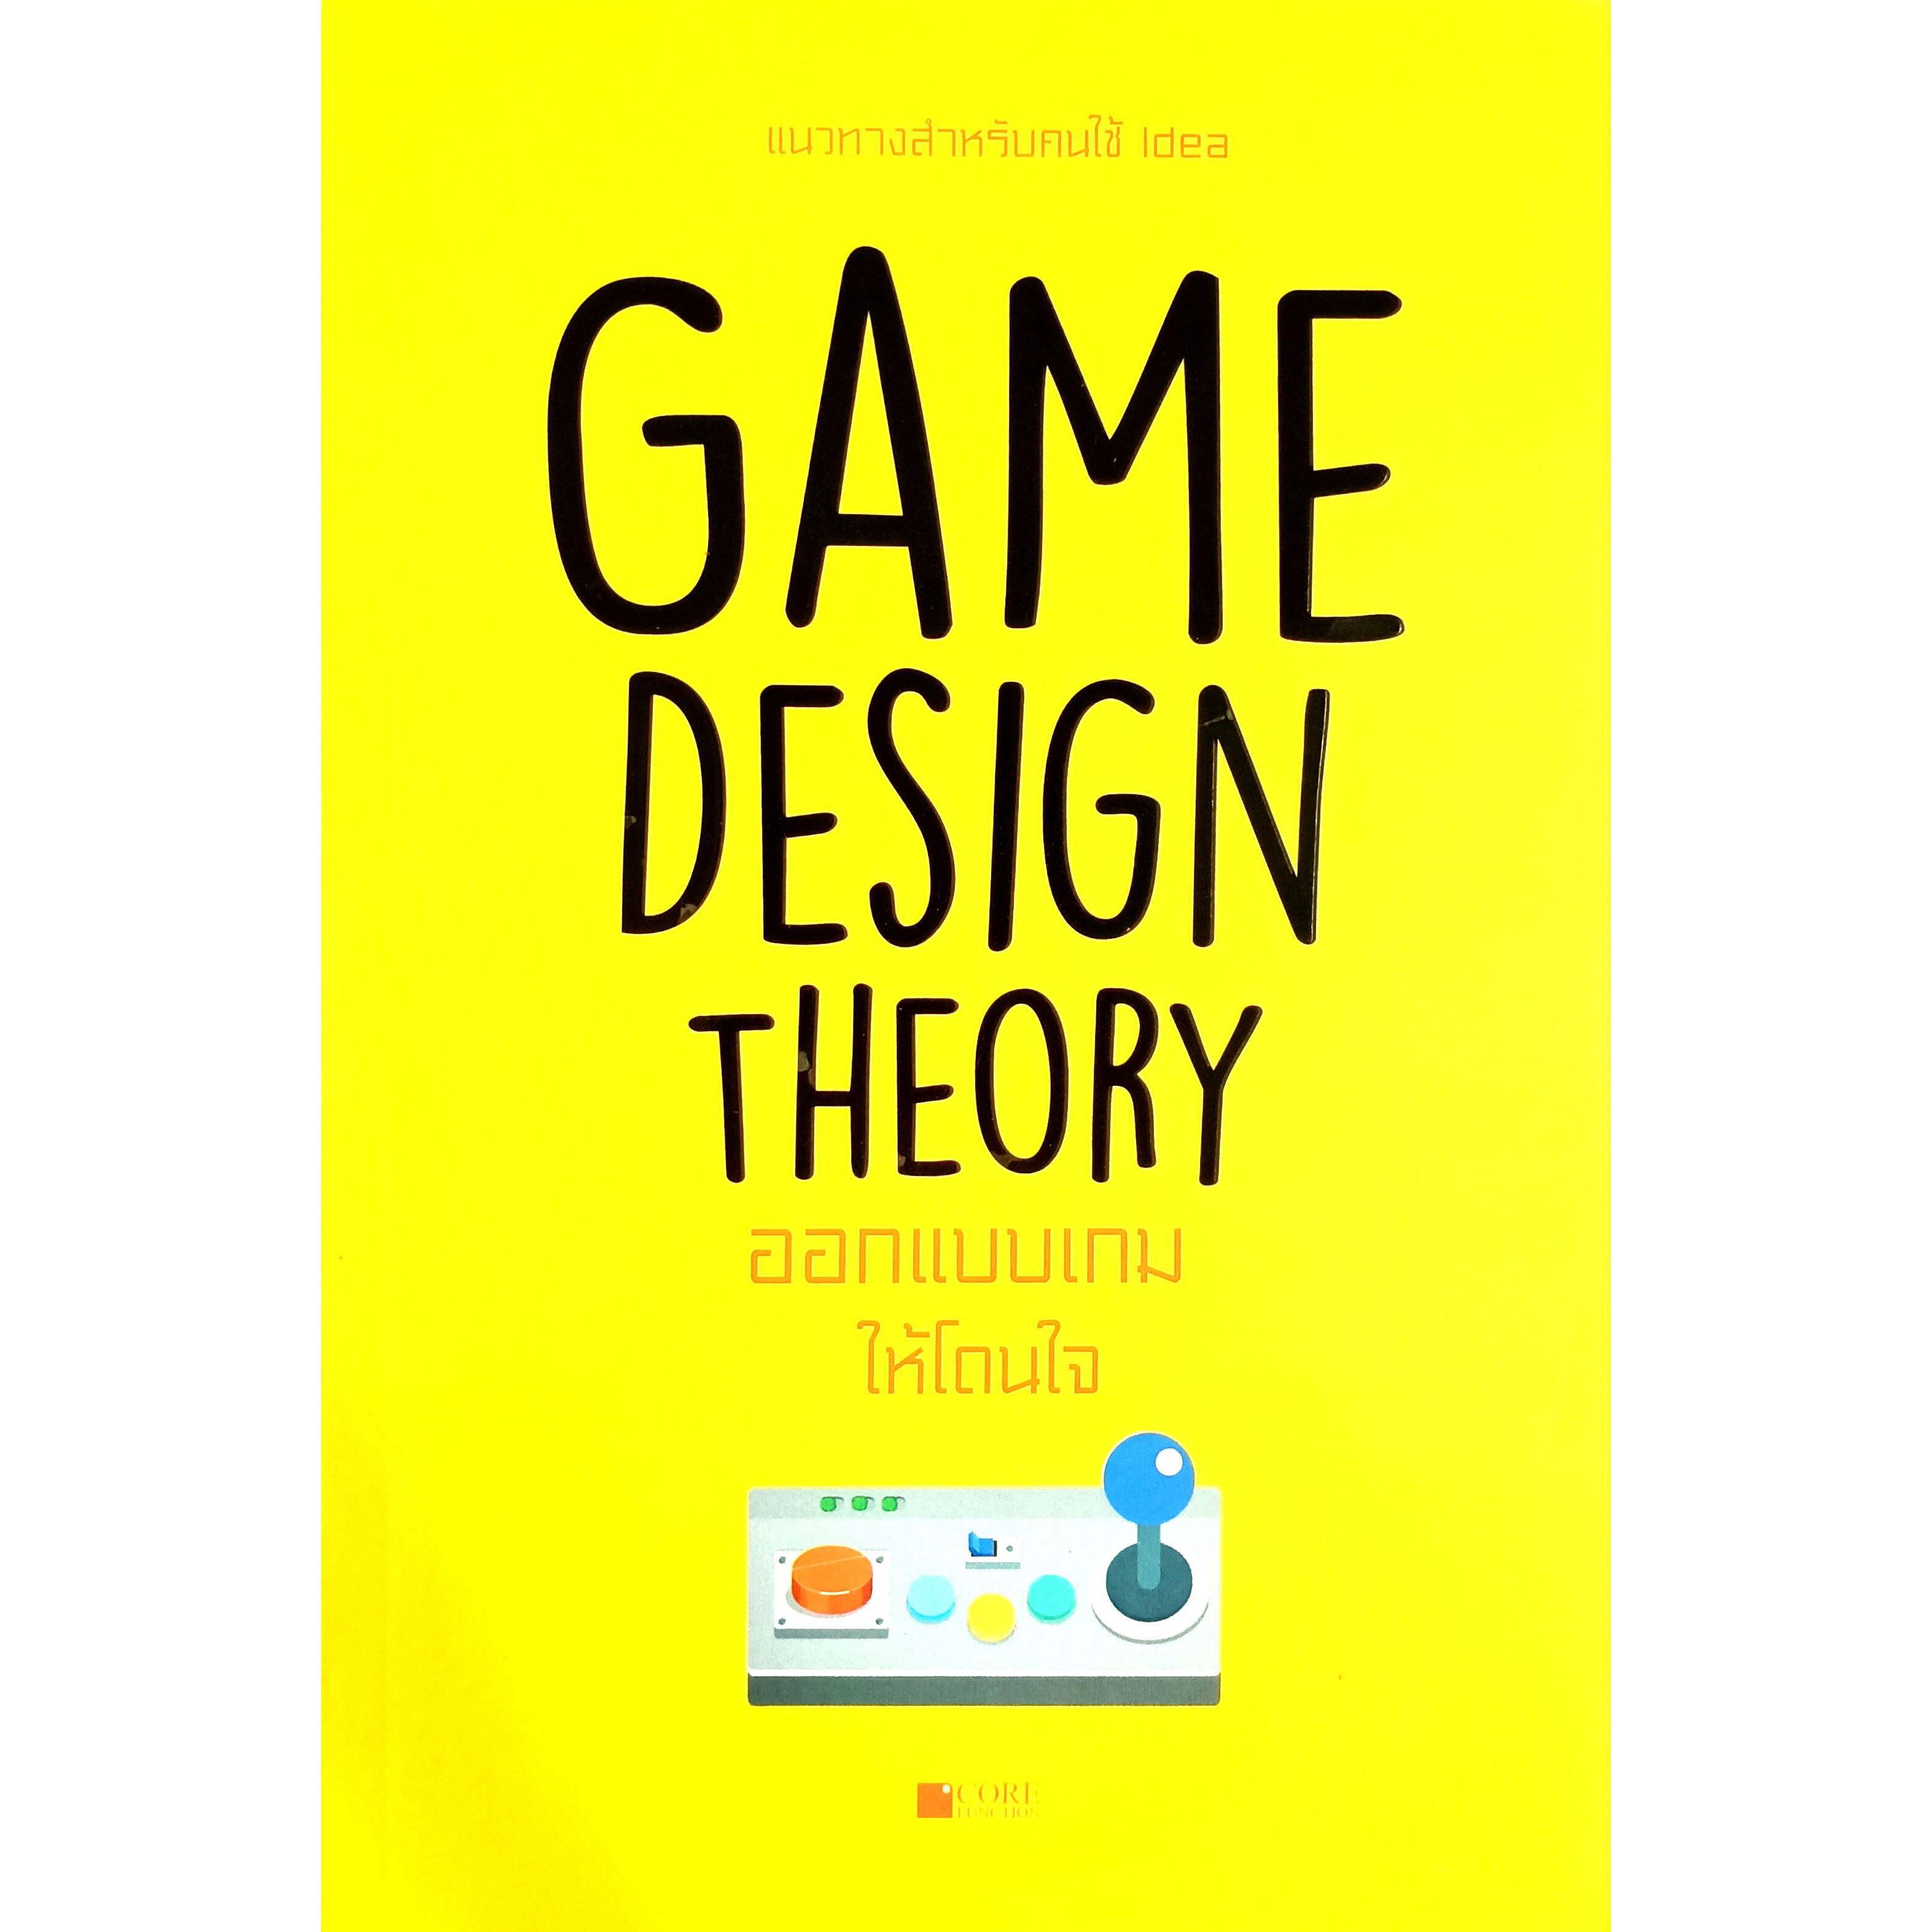 Game Design Theory ออกแบบเกมให้โดนใจ(สภาพ B หนังสือมือ 1 )